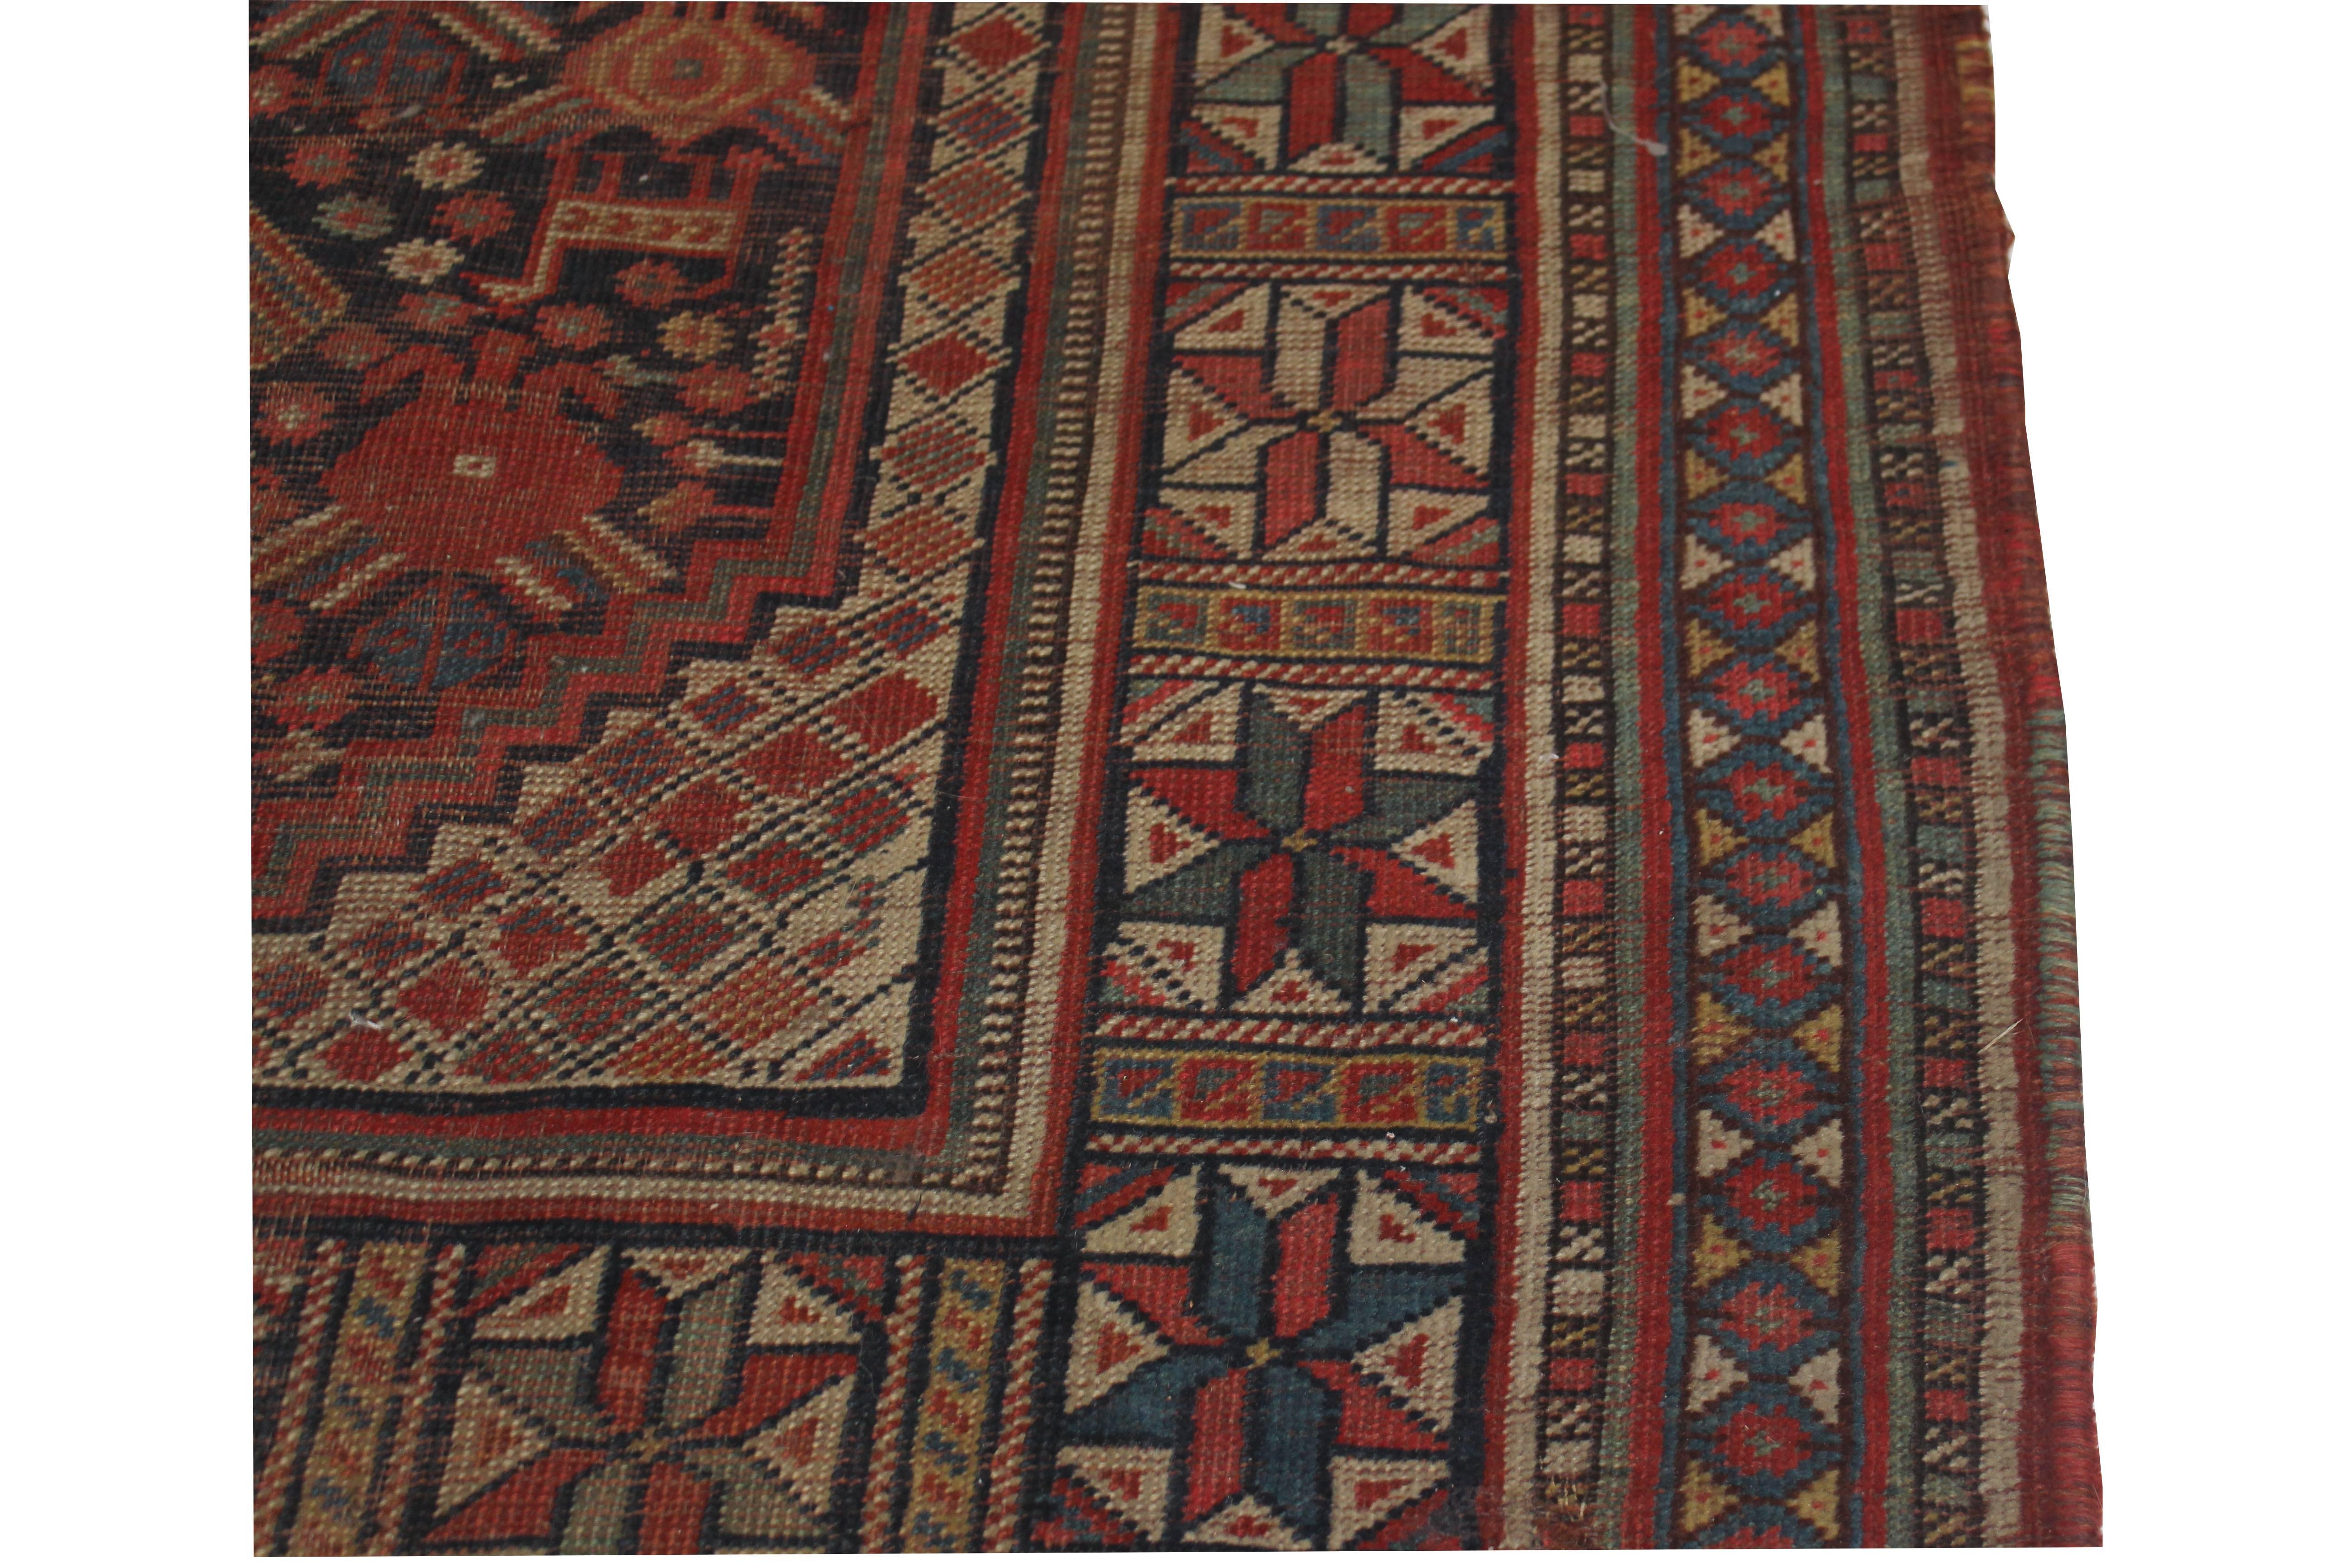 Early 20th Century Antique Persian Shiraz Rug